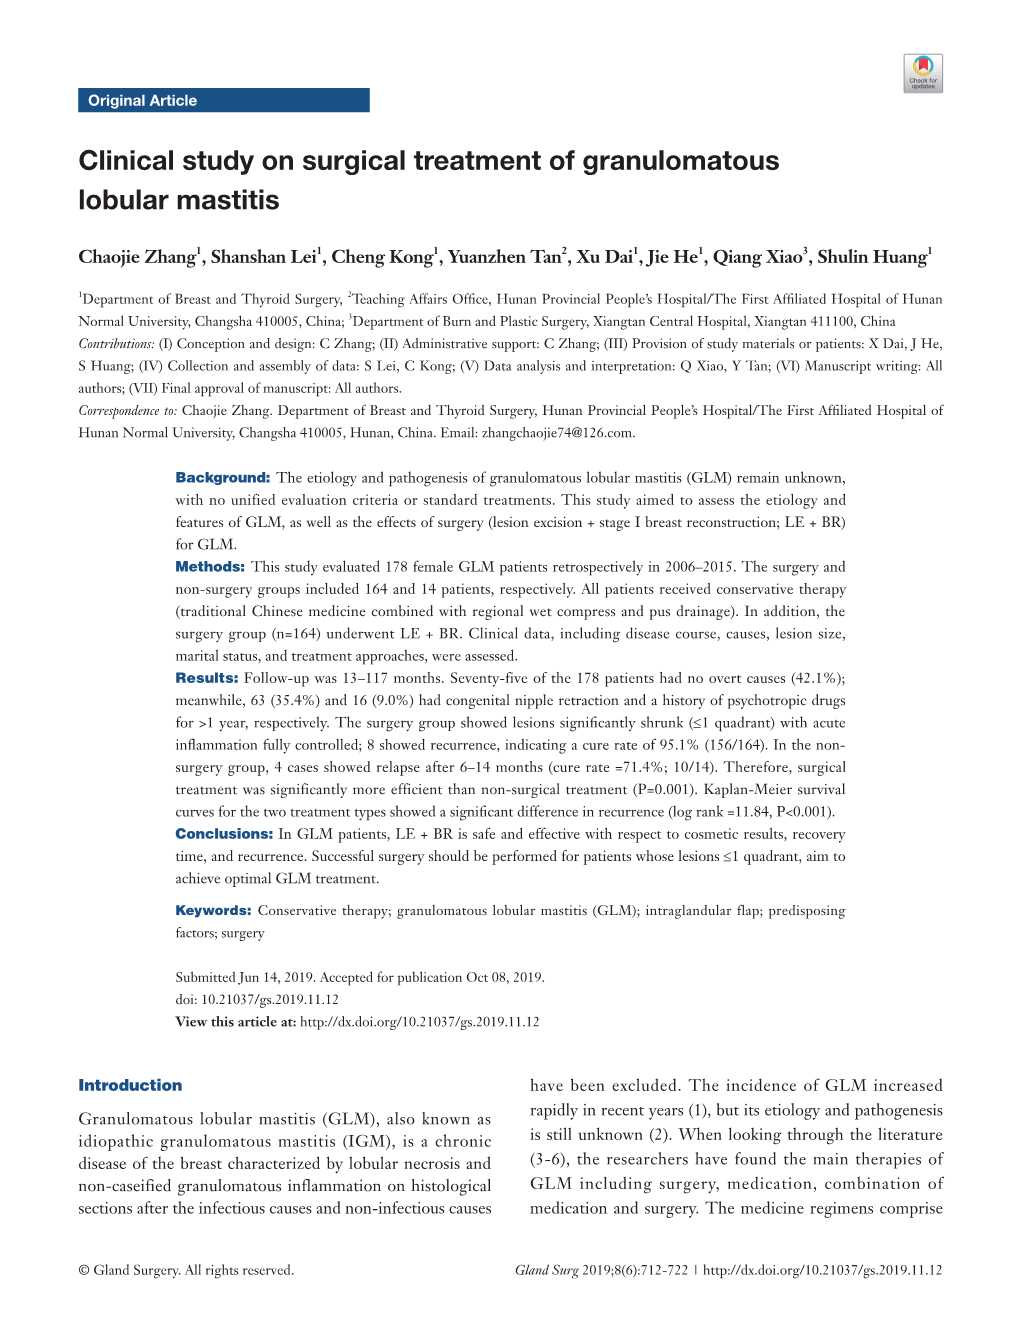 Clinical Study on Surgical Treatment of Granulomatous Lobular Mastitis